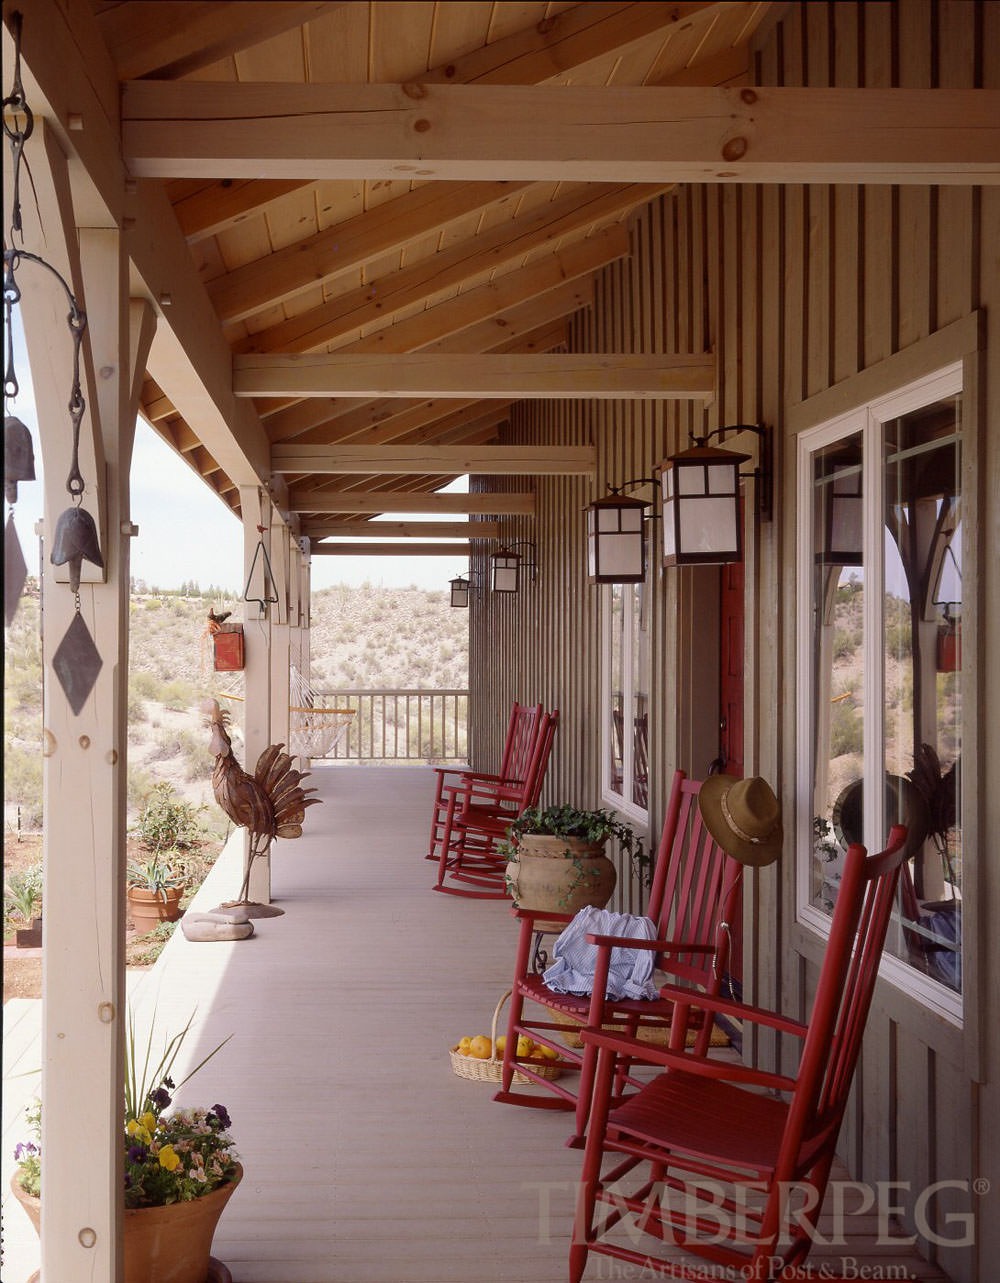 Wickenburg, AZ (3962) exterior view of porch